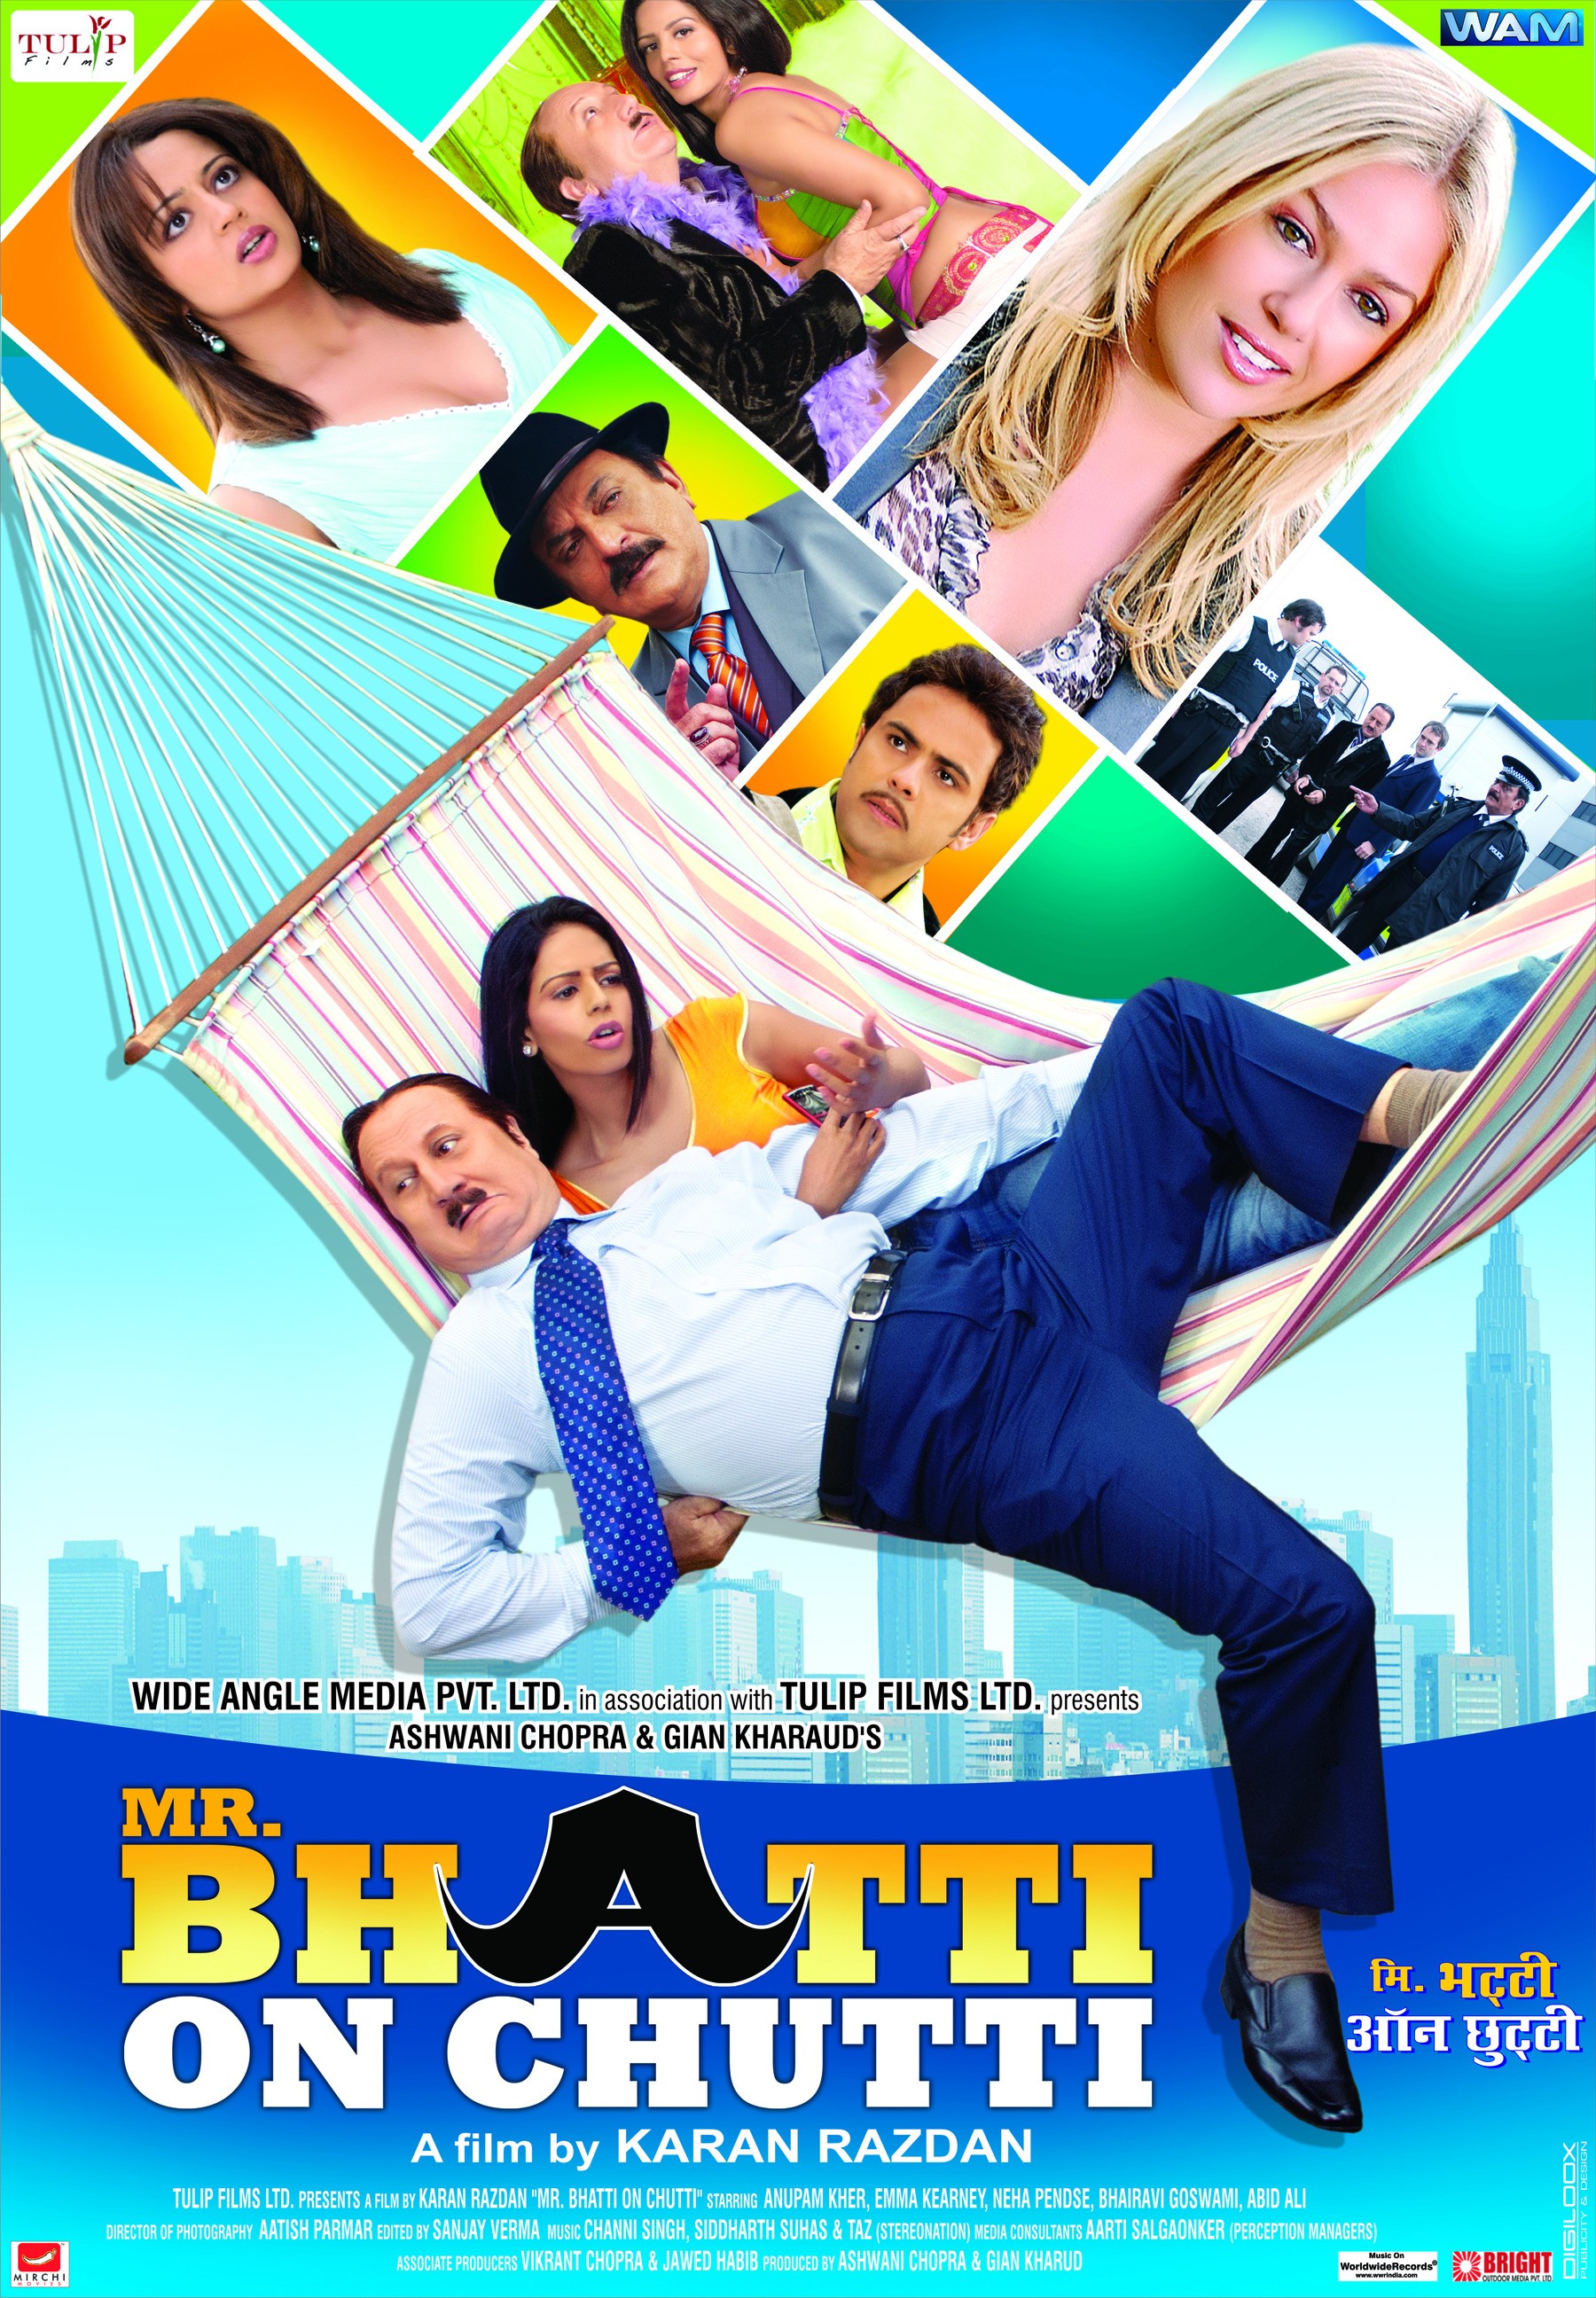 Mega Sized Movie Poster Image for Mr Bhatti on Chutti 